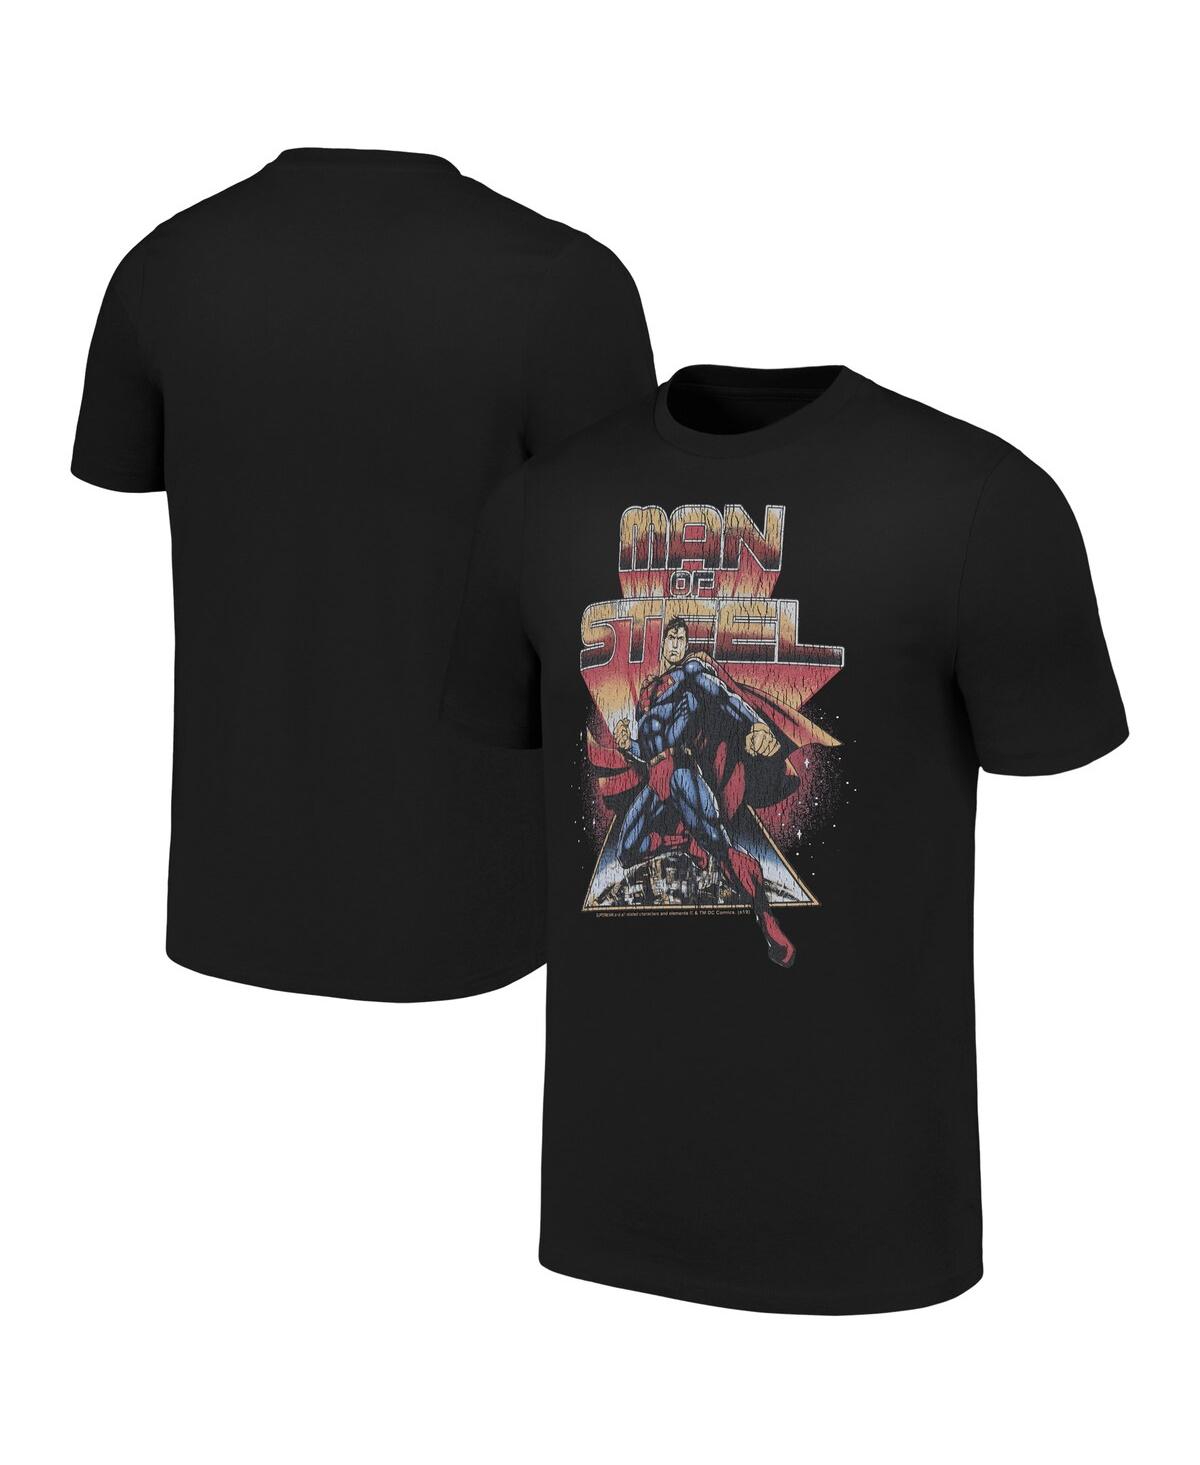 Men's and Women's Mad Engine Black Superman Man of Steel T-shirt - Black